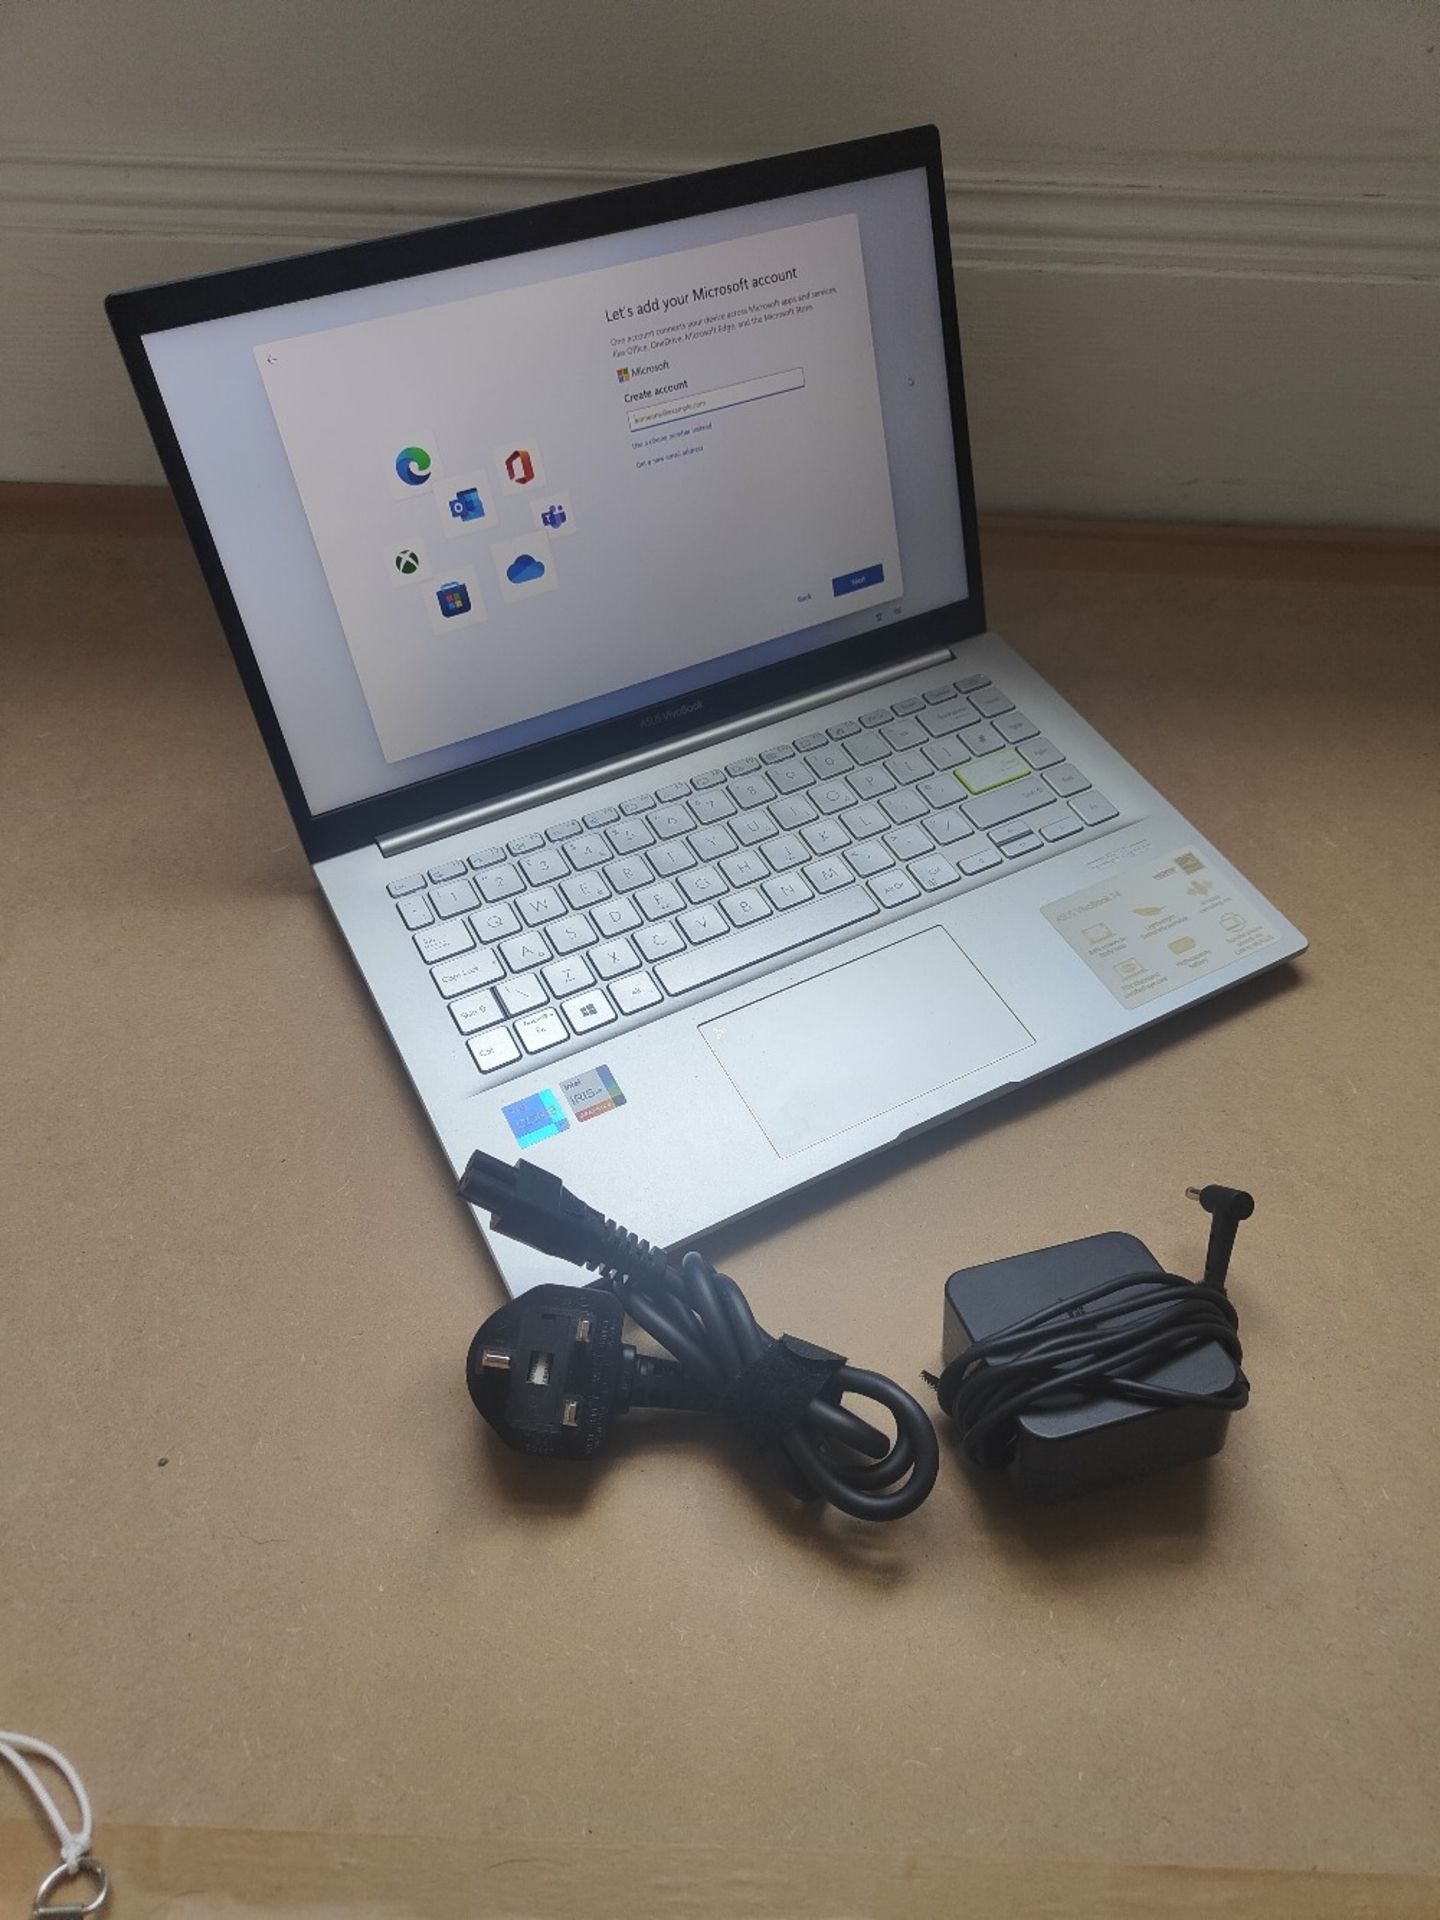 Asus VivoBook S413E Laptop (2021) - Intel i7 11th Gen - Image 2 of 5